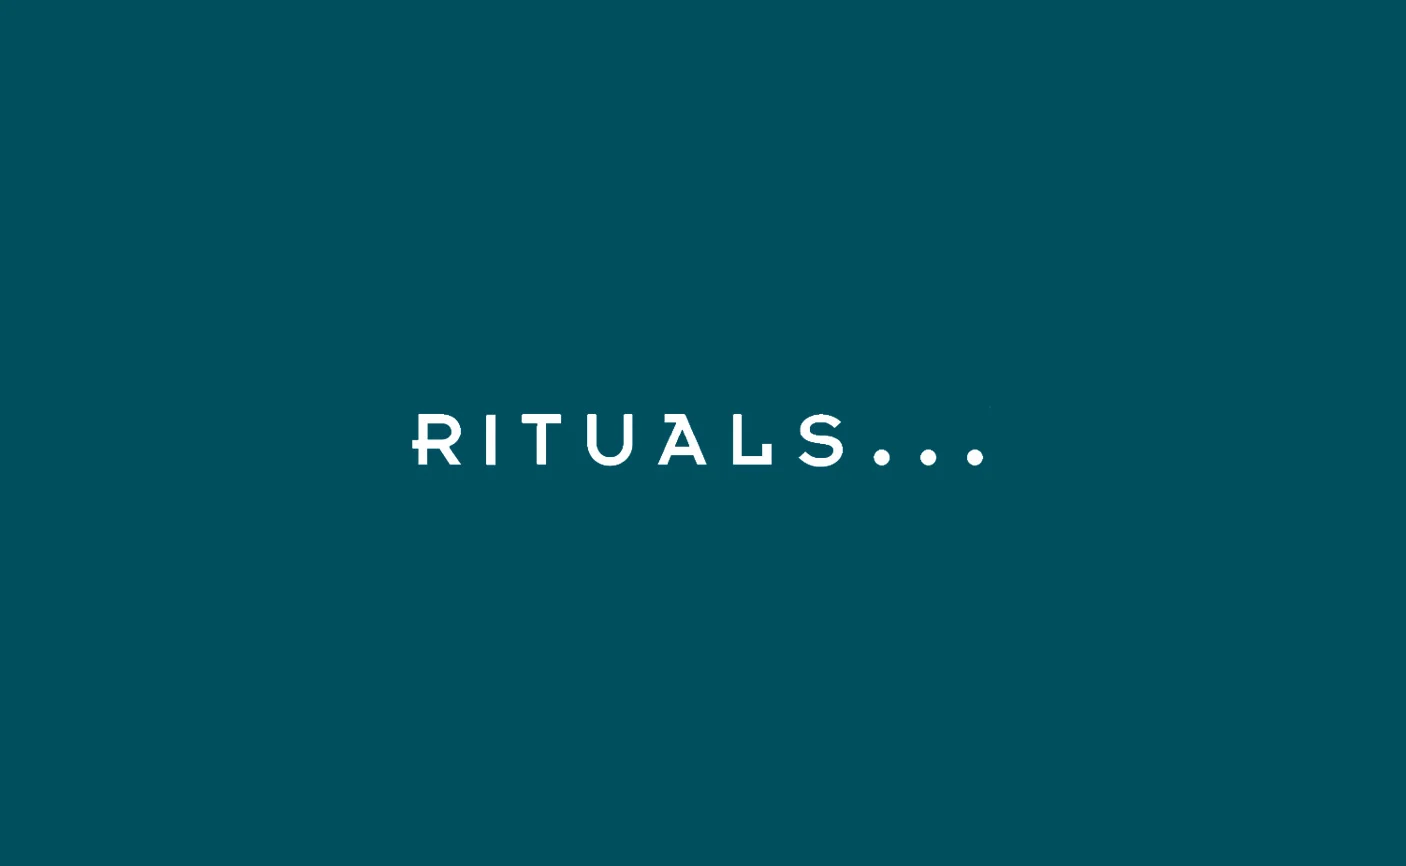 Rituals - customer testimonial and customer reference